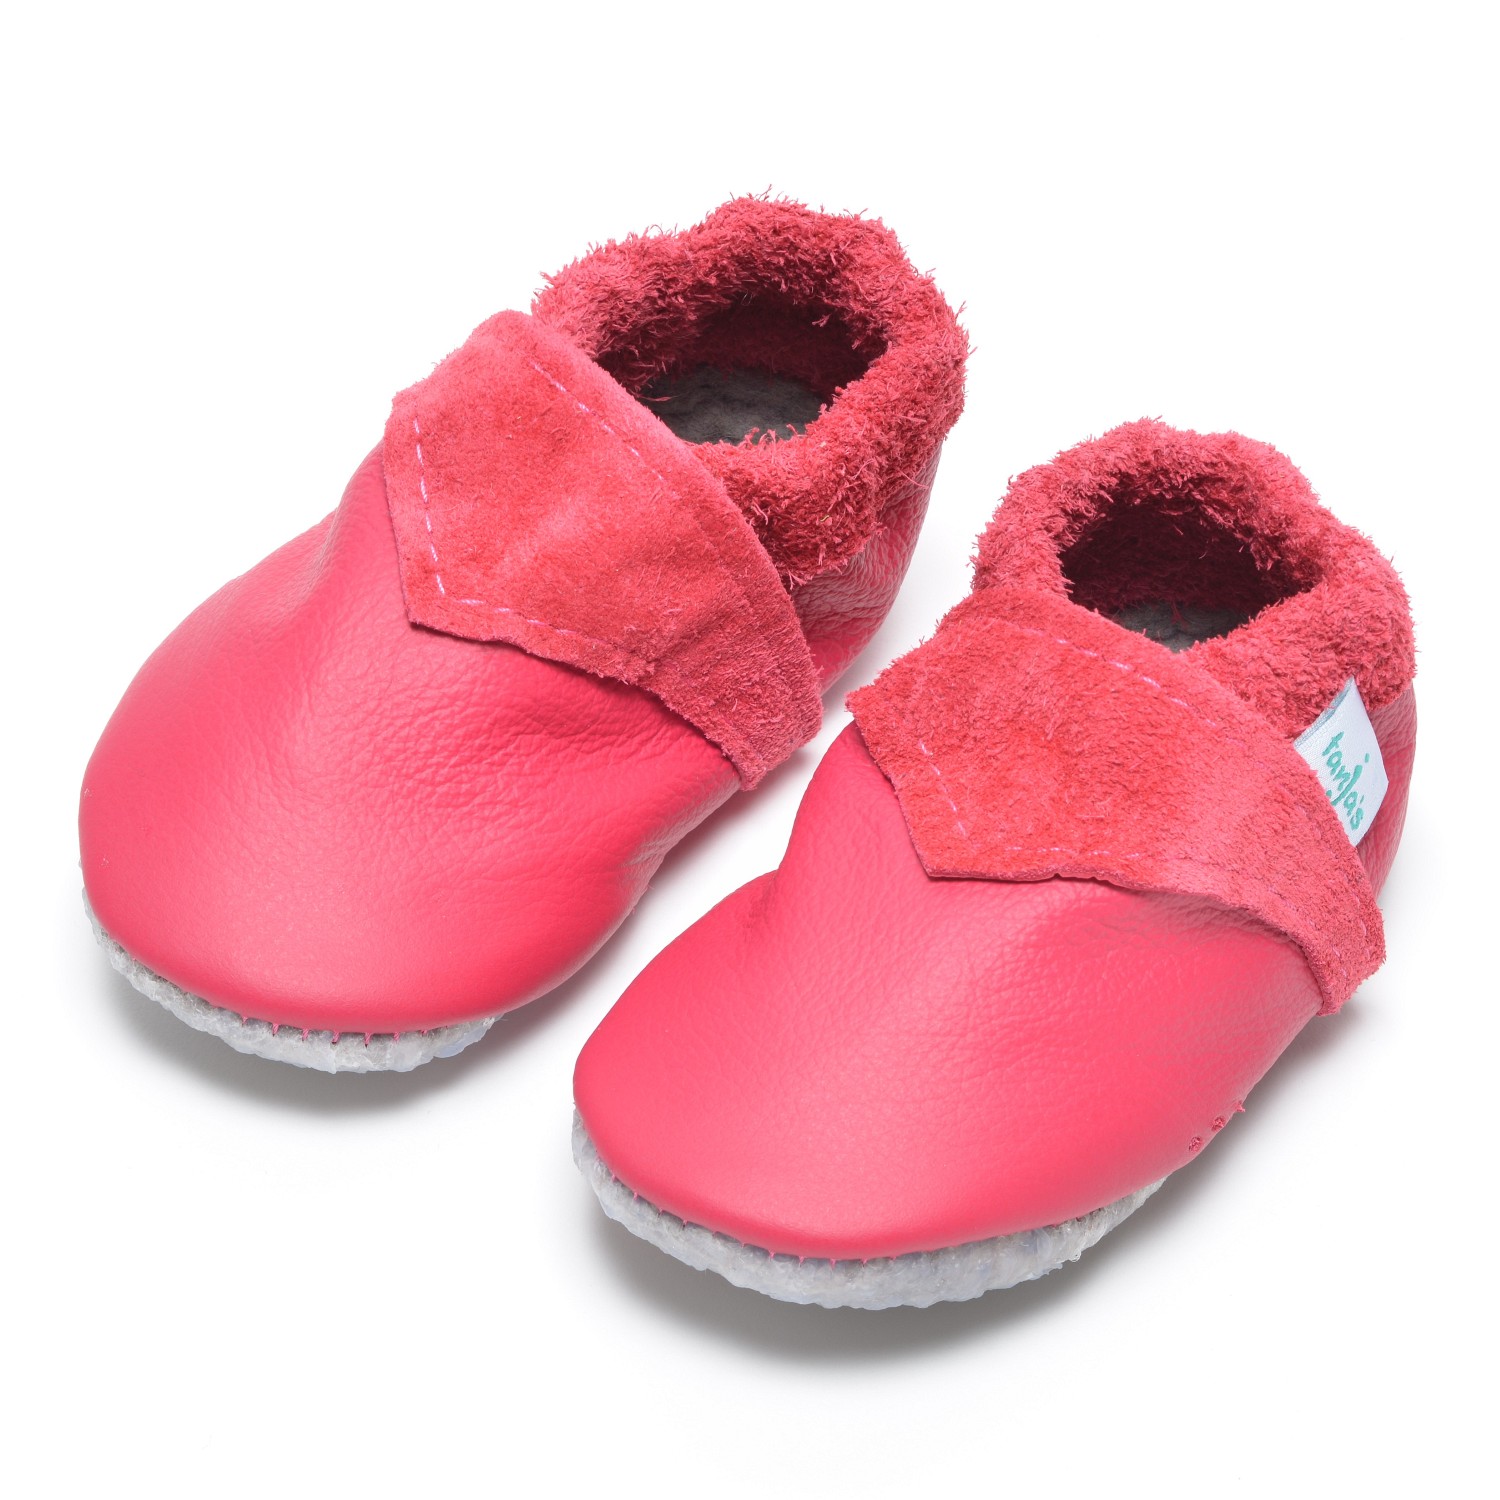 Baby-Lederschuhe, pink